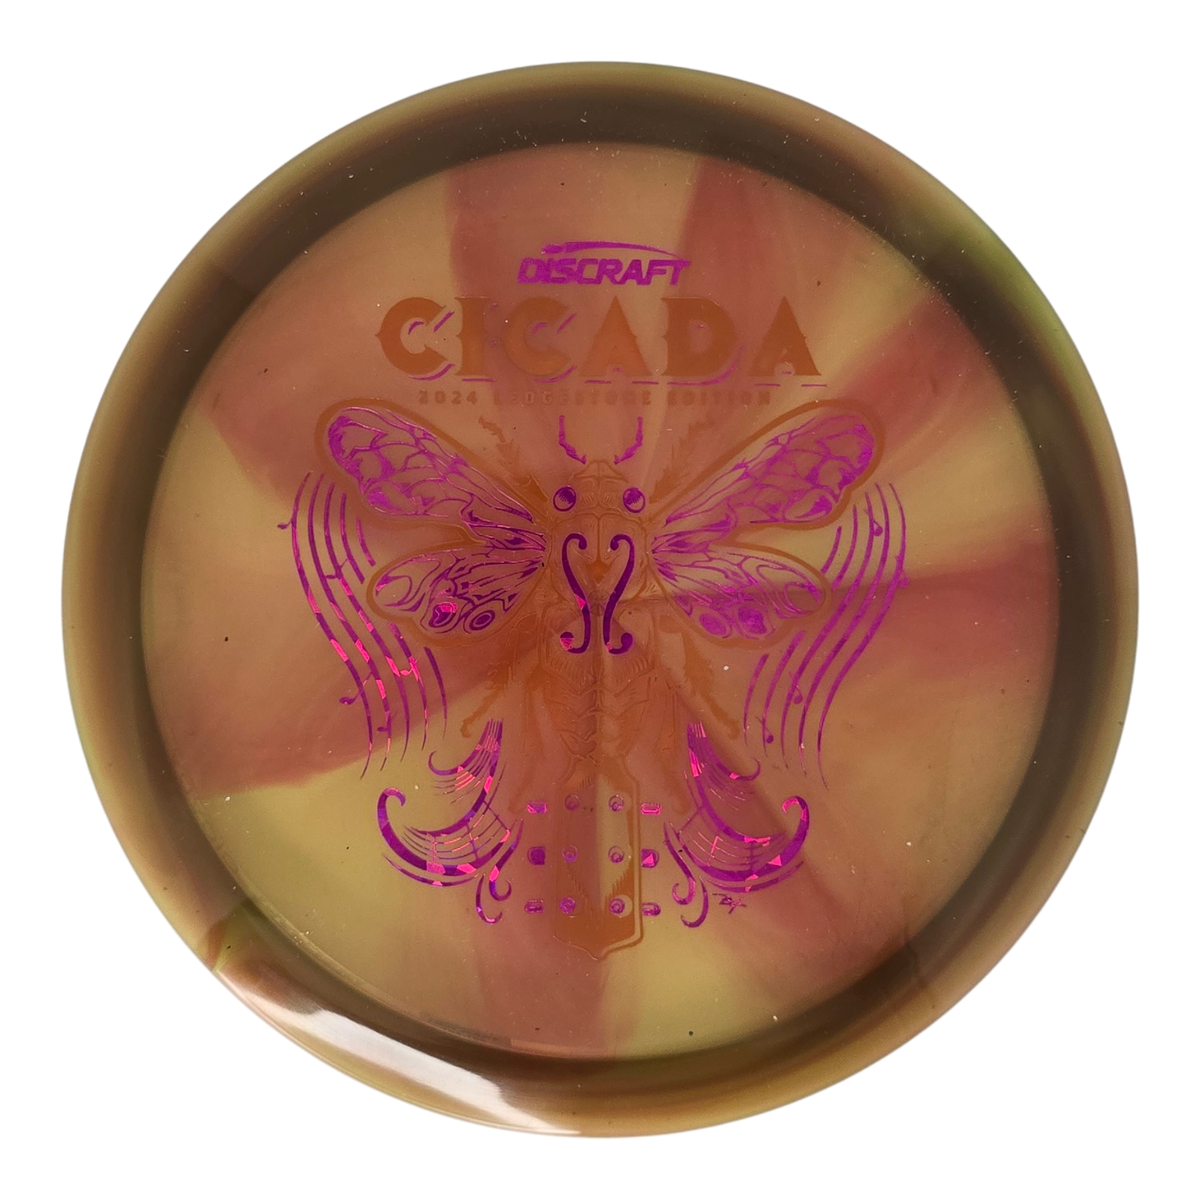 Discraft Z Swirl Cicada - Ledgestone 2024 (Season 2)